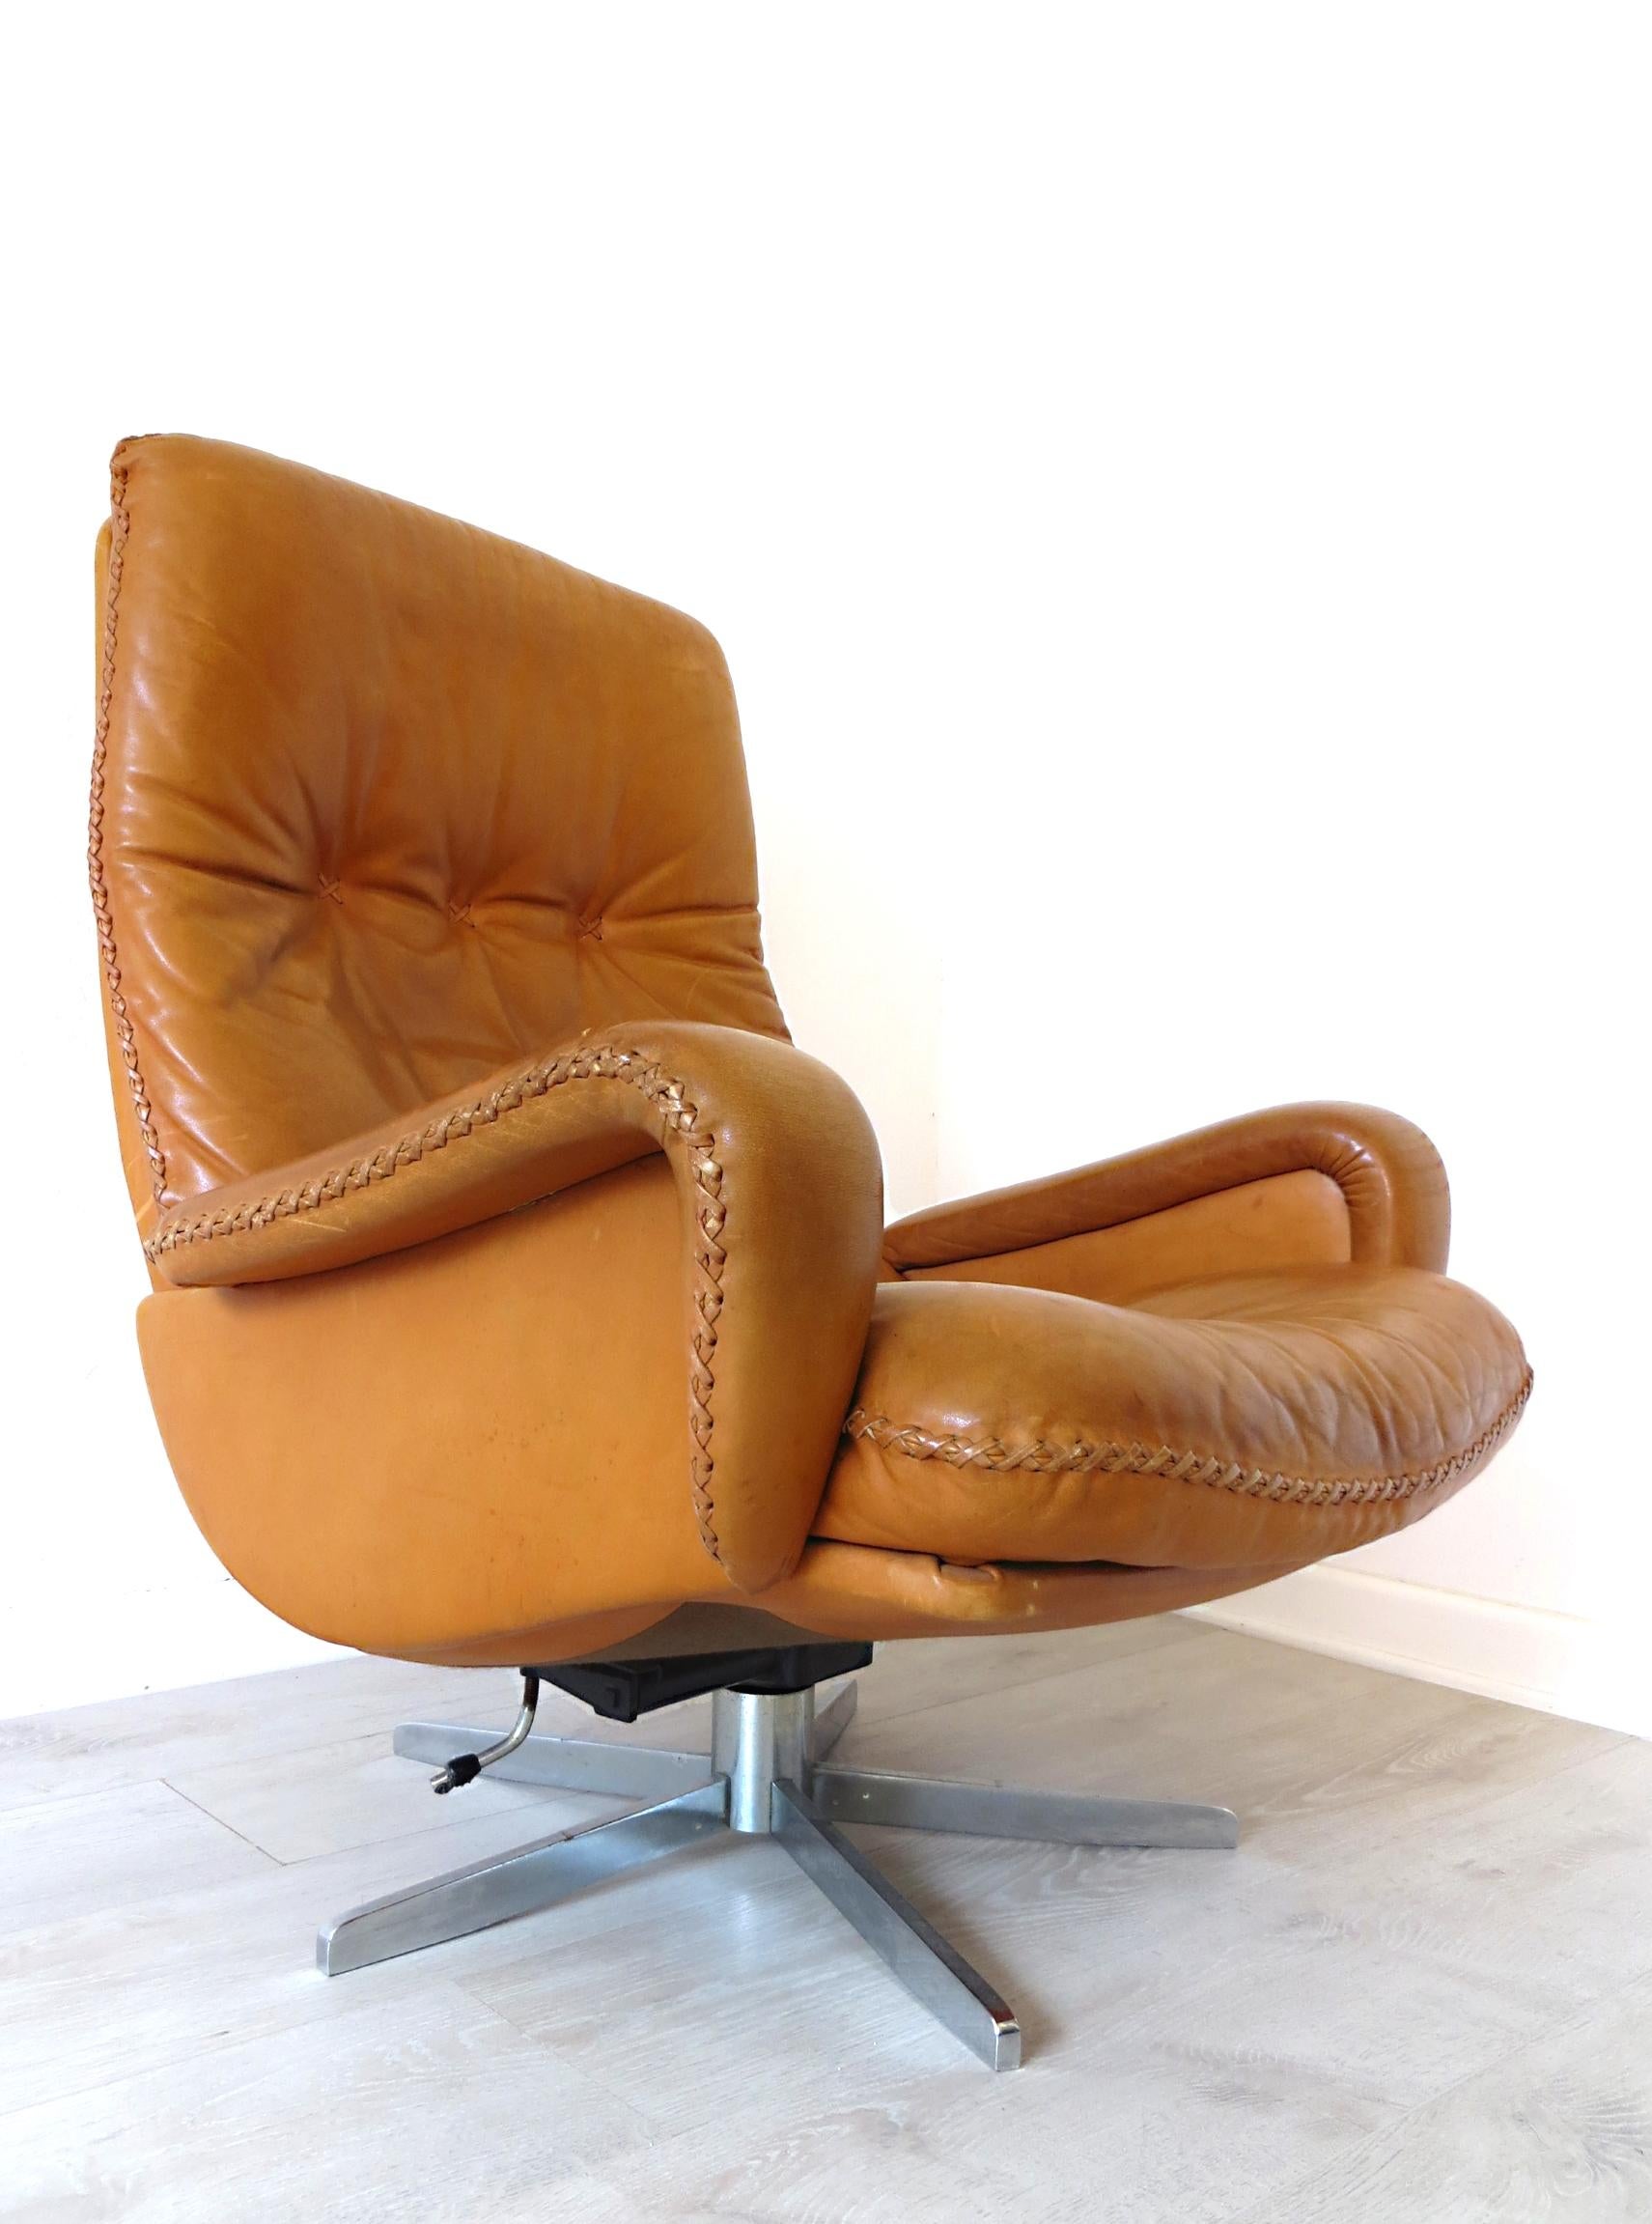 Swiss De Sede S-231 James Bond Cognac Brown Leather Lounge Swivel Armchair 1960s